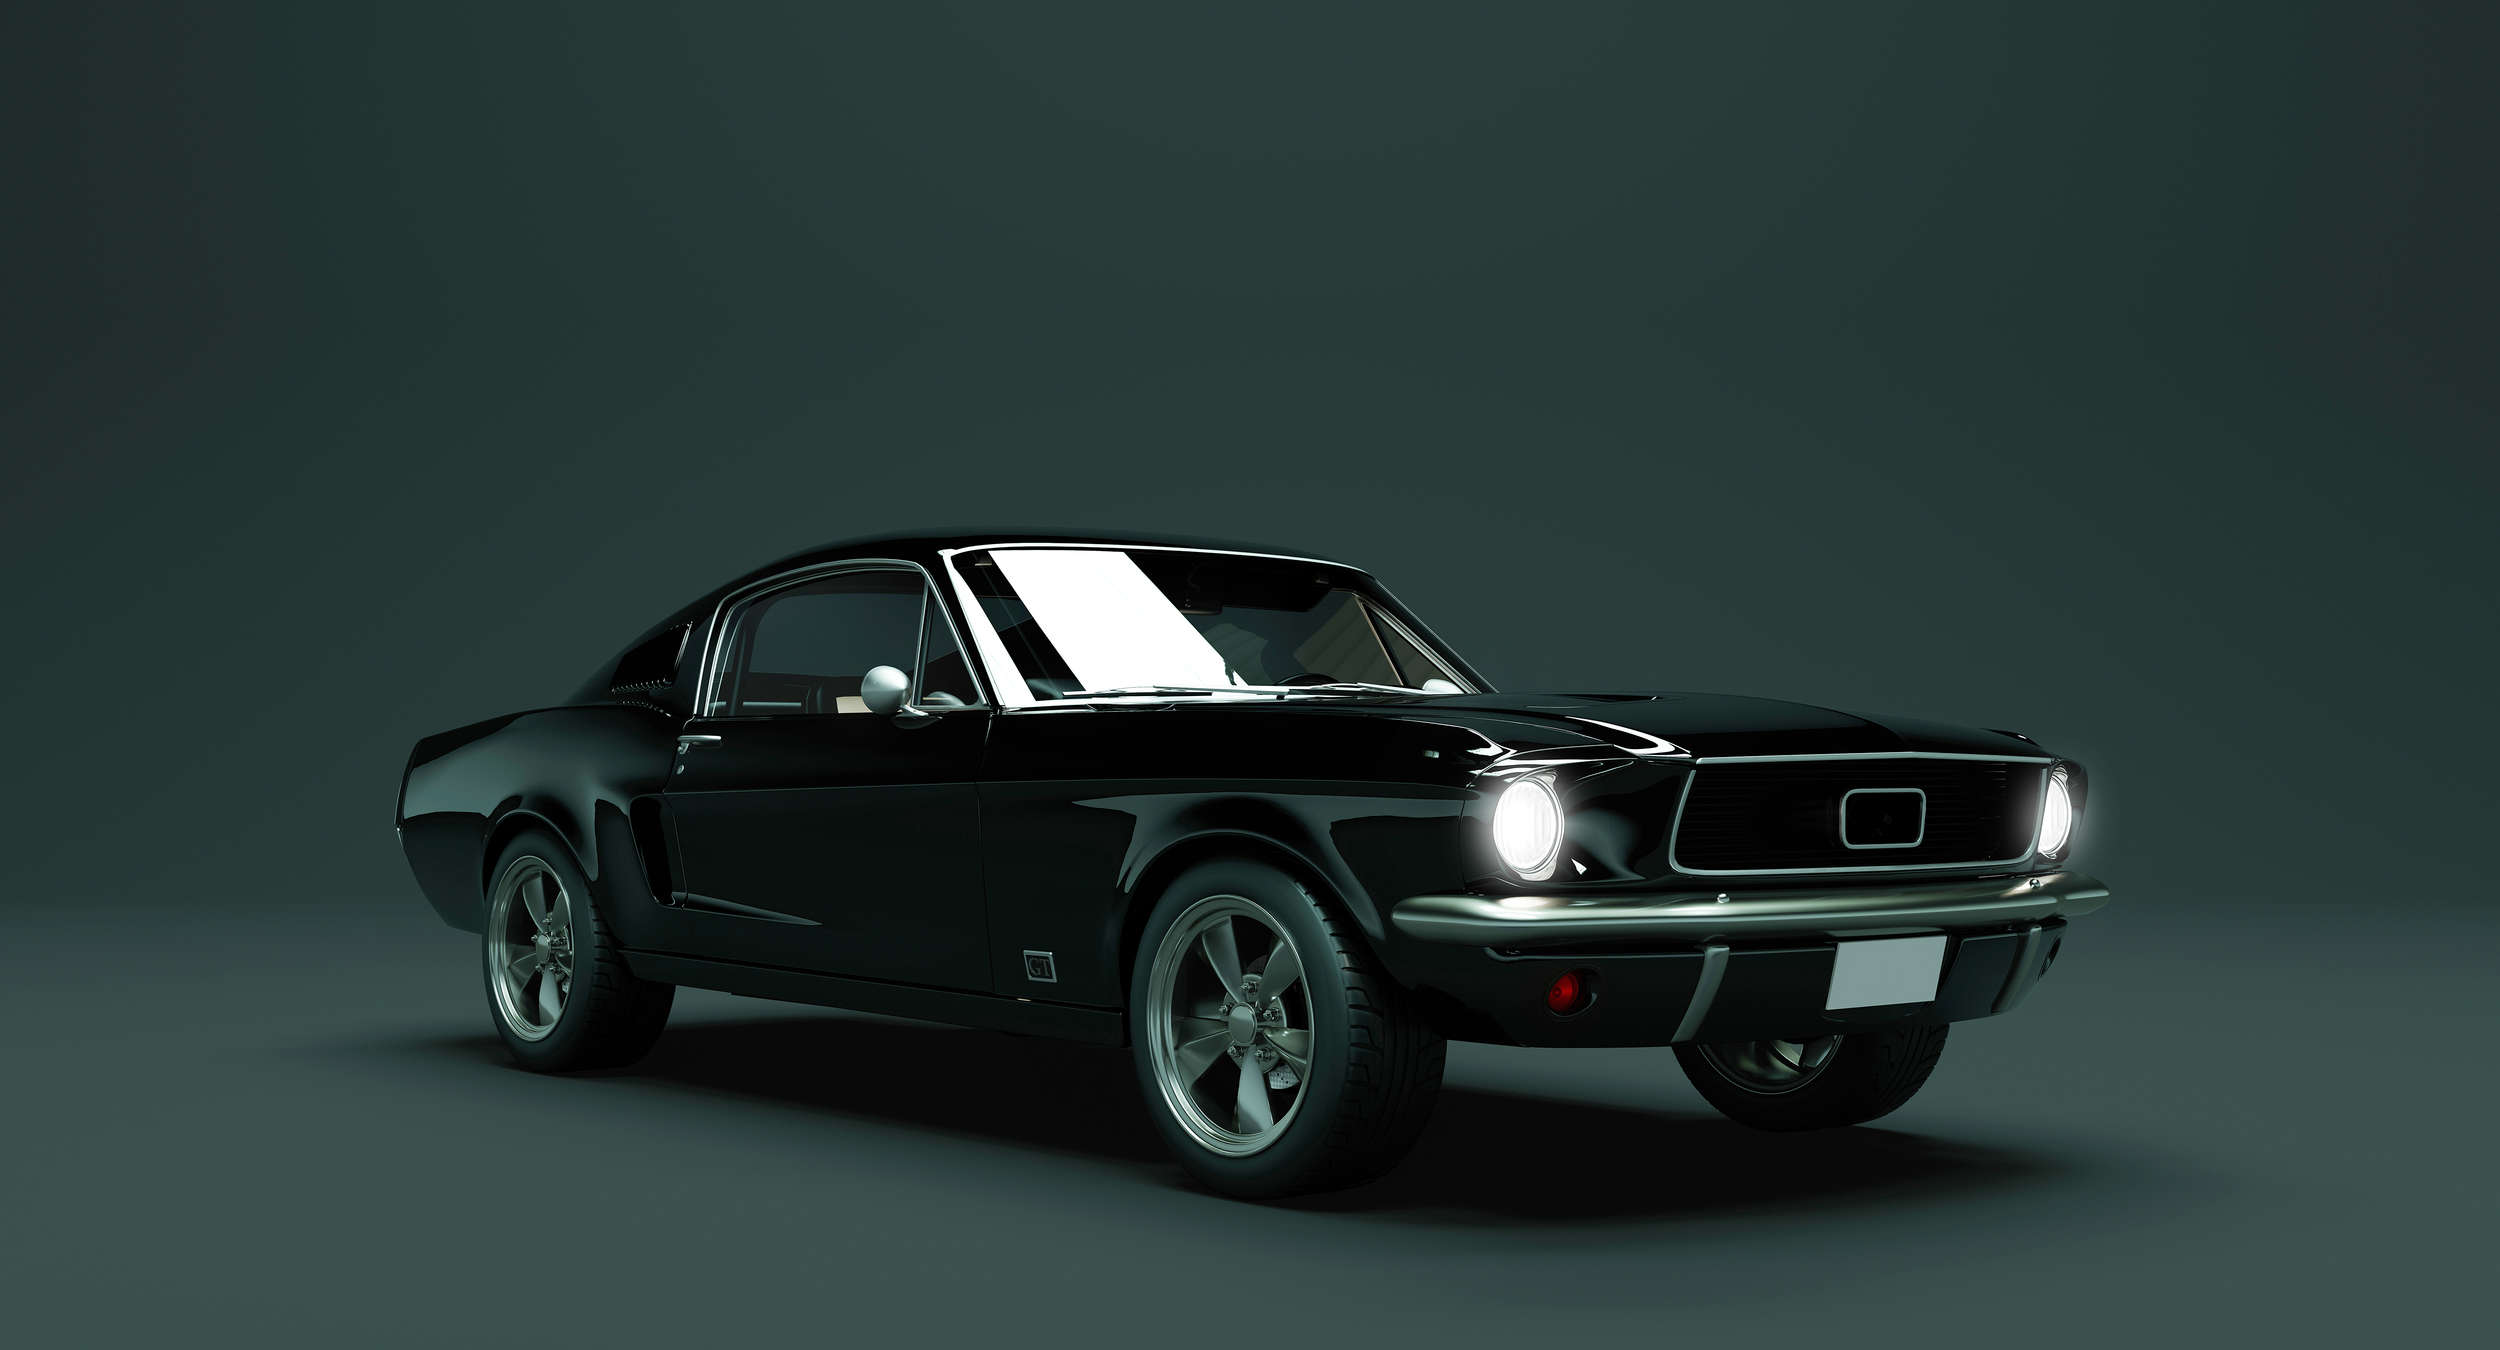             Mustang 2 - Fototapete, Mustang 1968 Vintage Car – Blau, Schwarz | Mattes Glattvlies
        